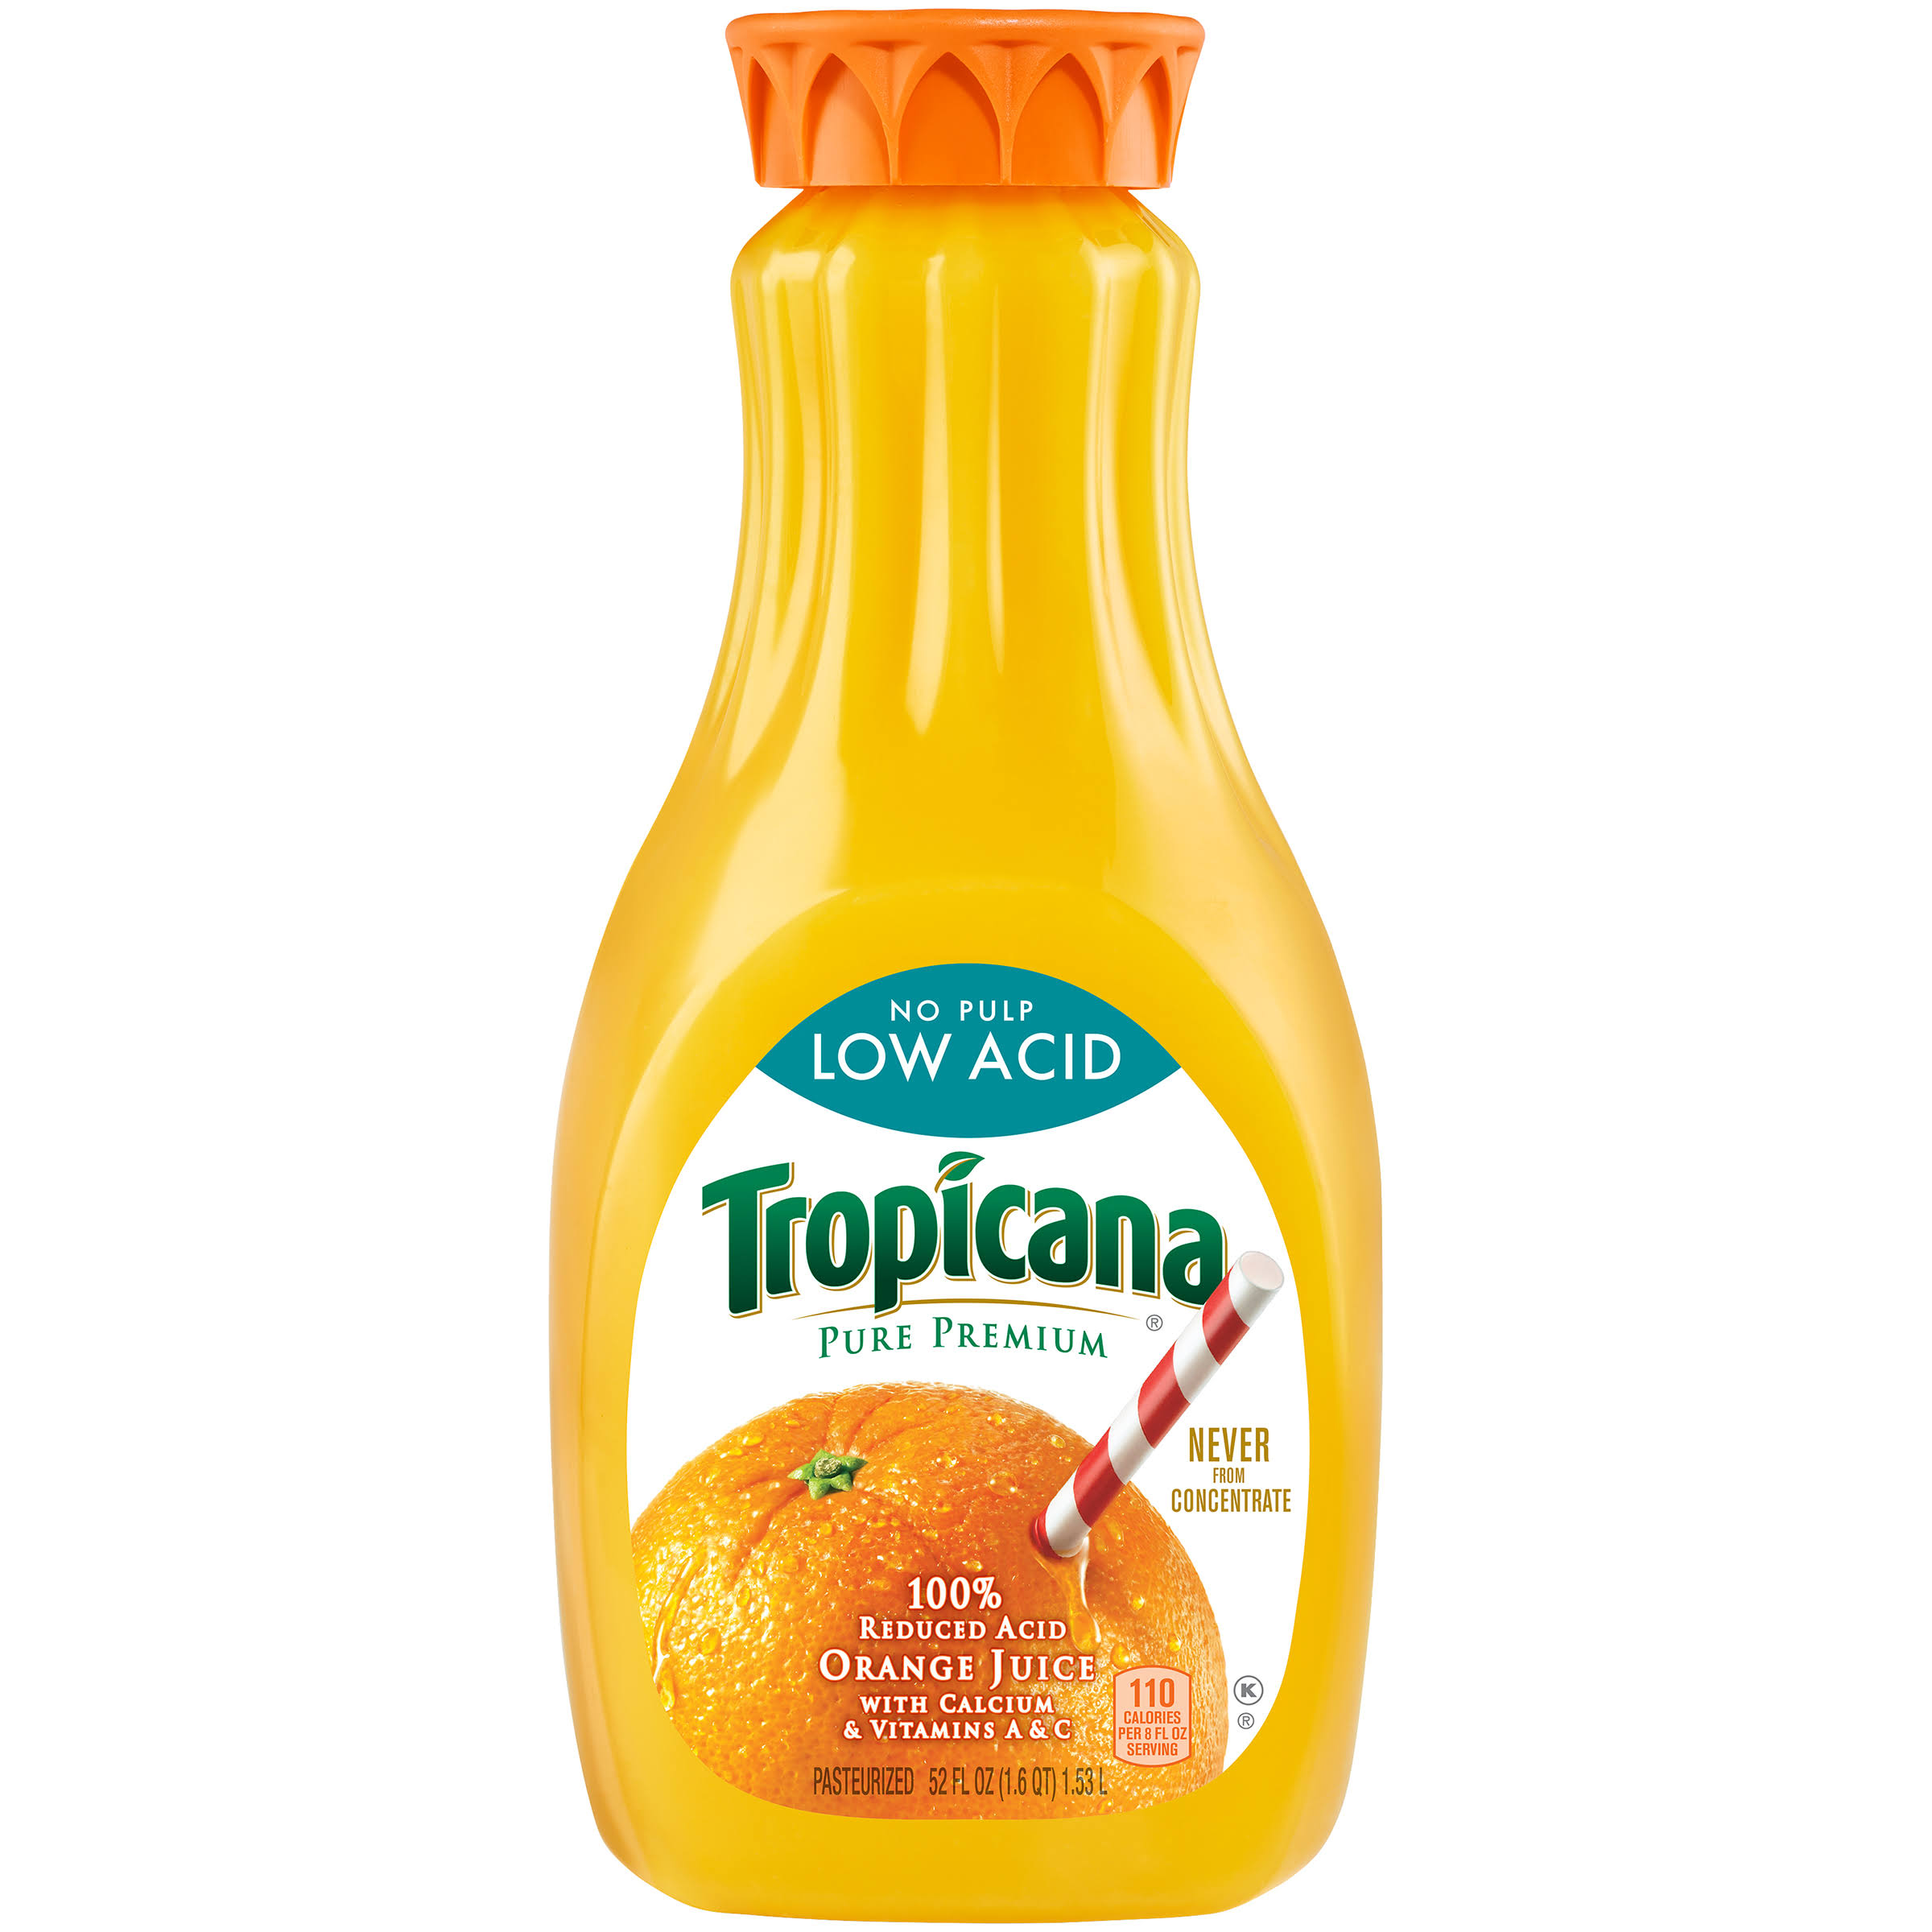 Tropicana Orange Juice No Pulp Low Acid Bottle 52 fl oz